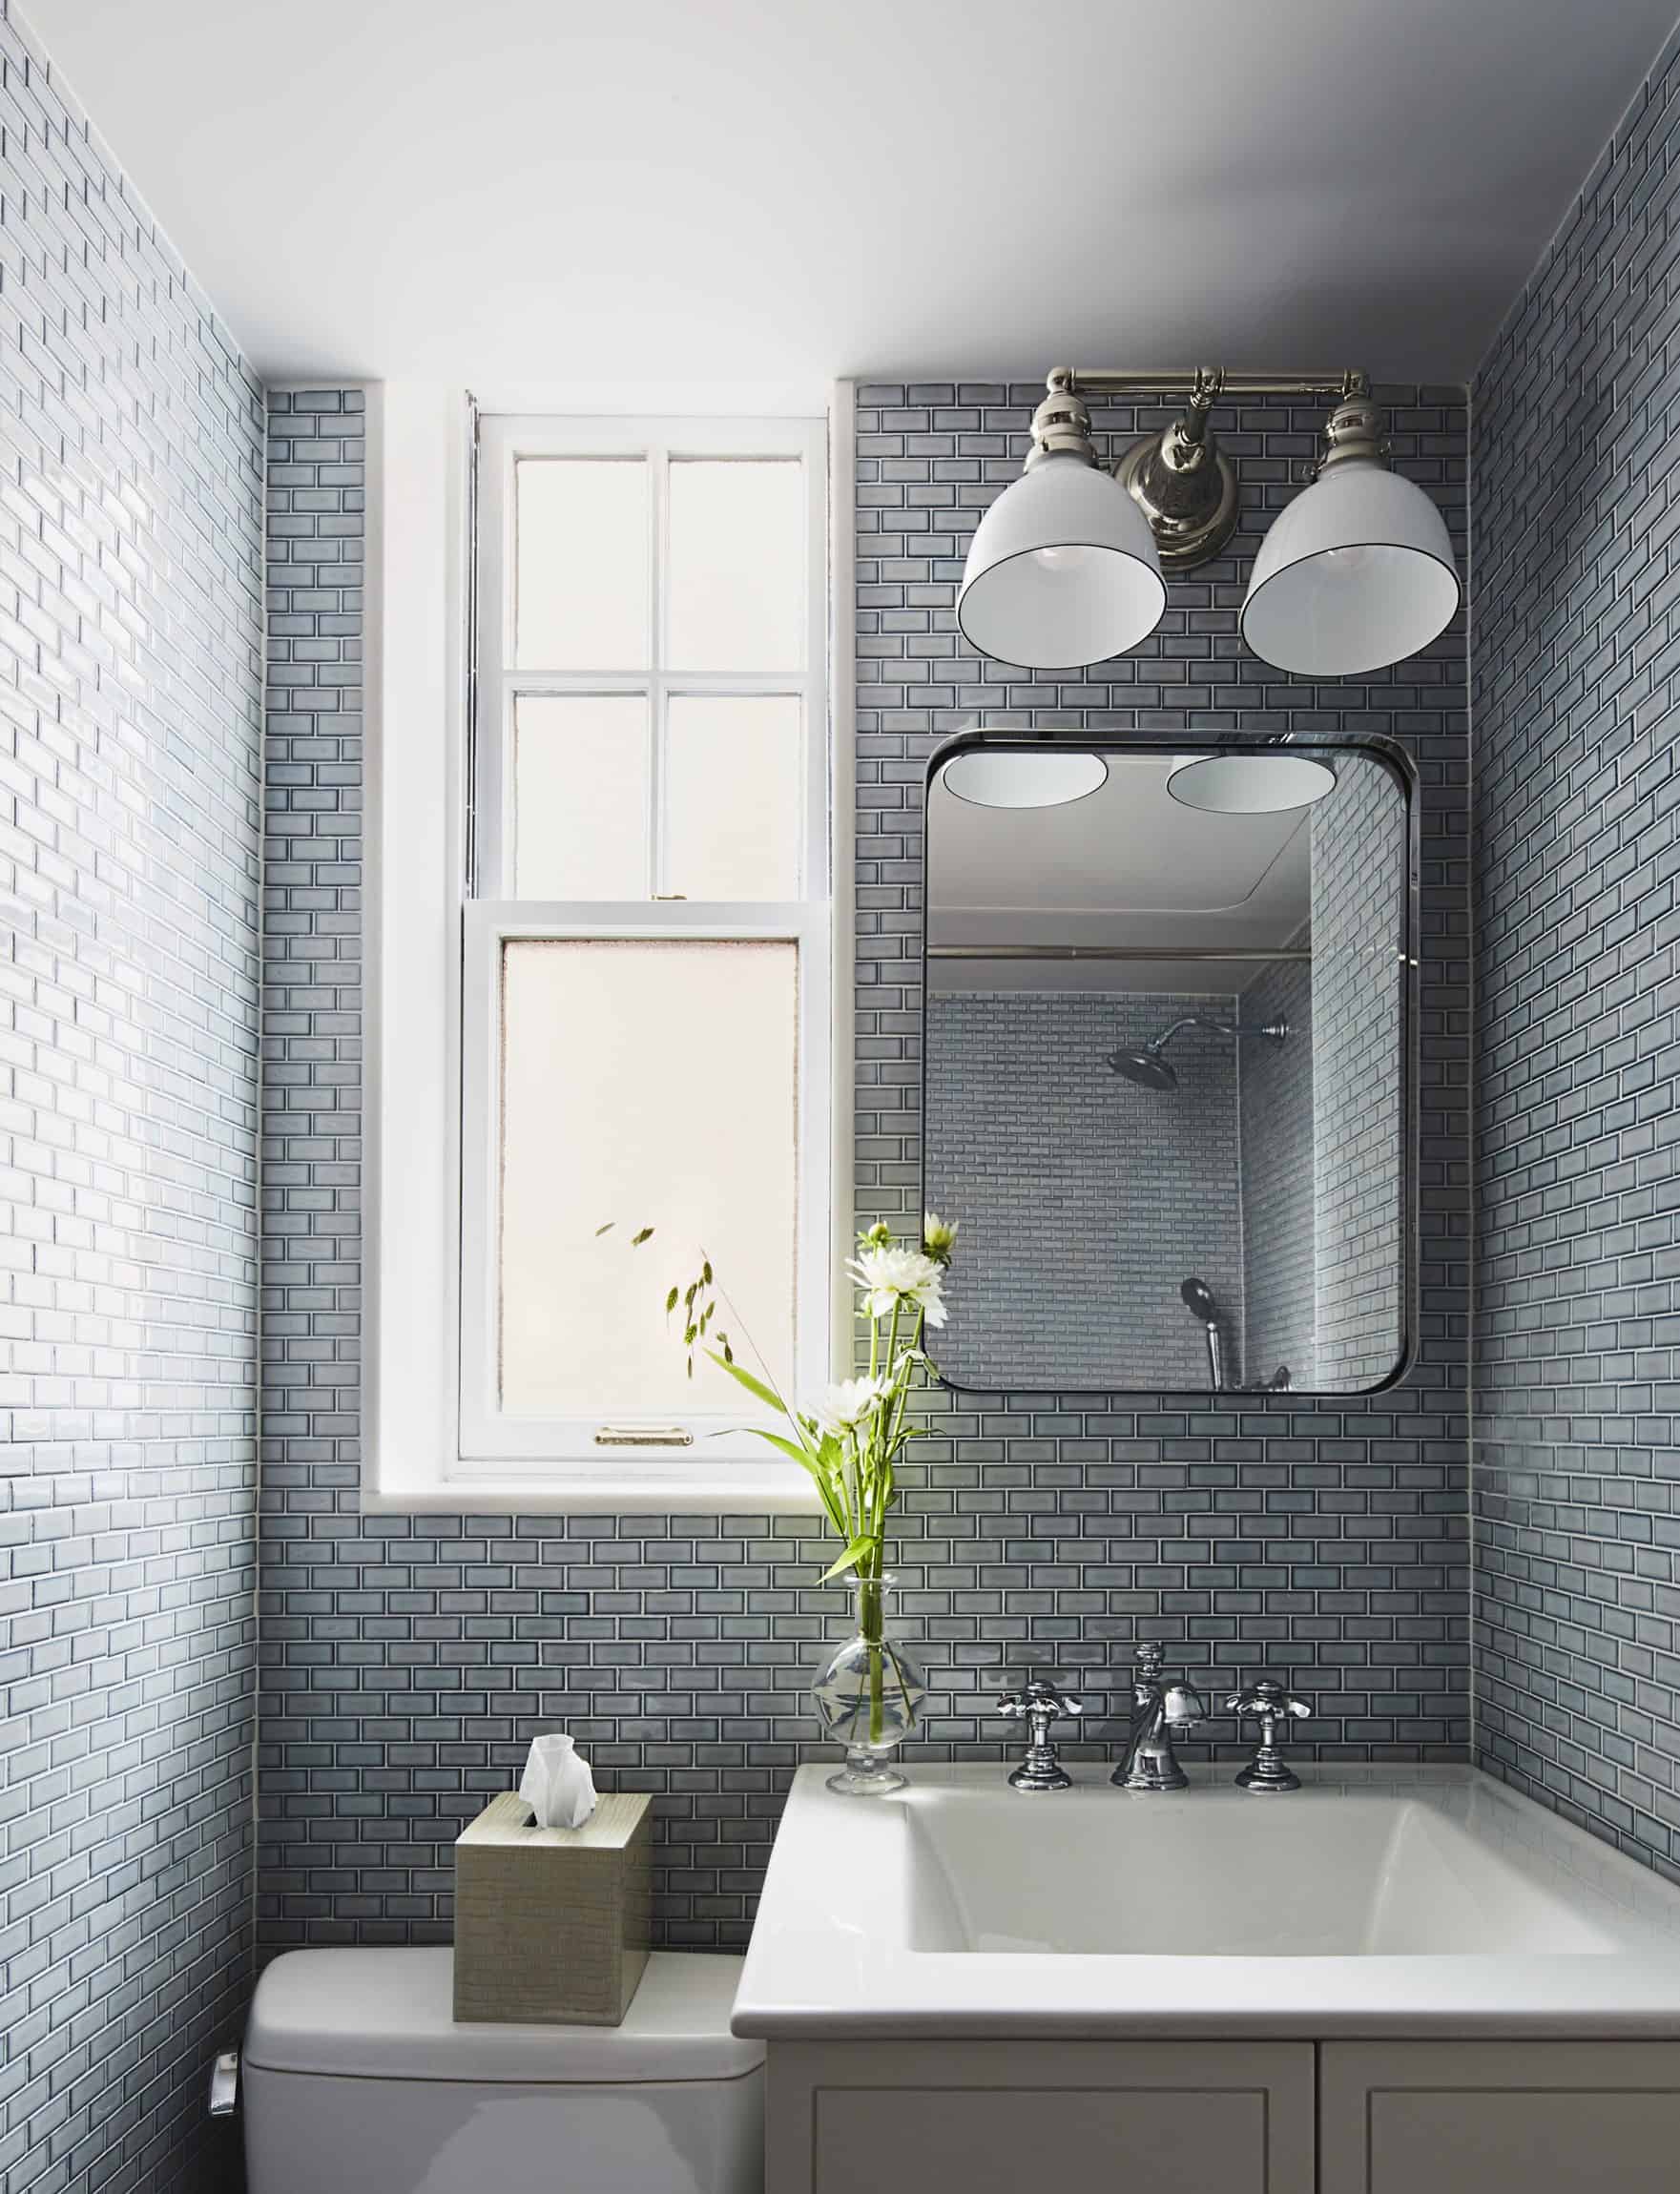 Enchanting Bathrooms With Subway Tiles, Subway Tile Bathrooms